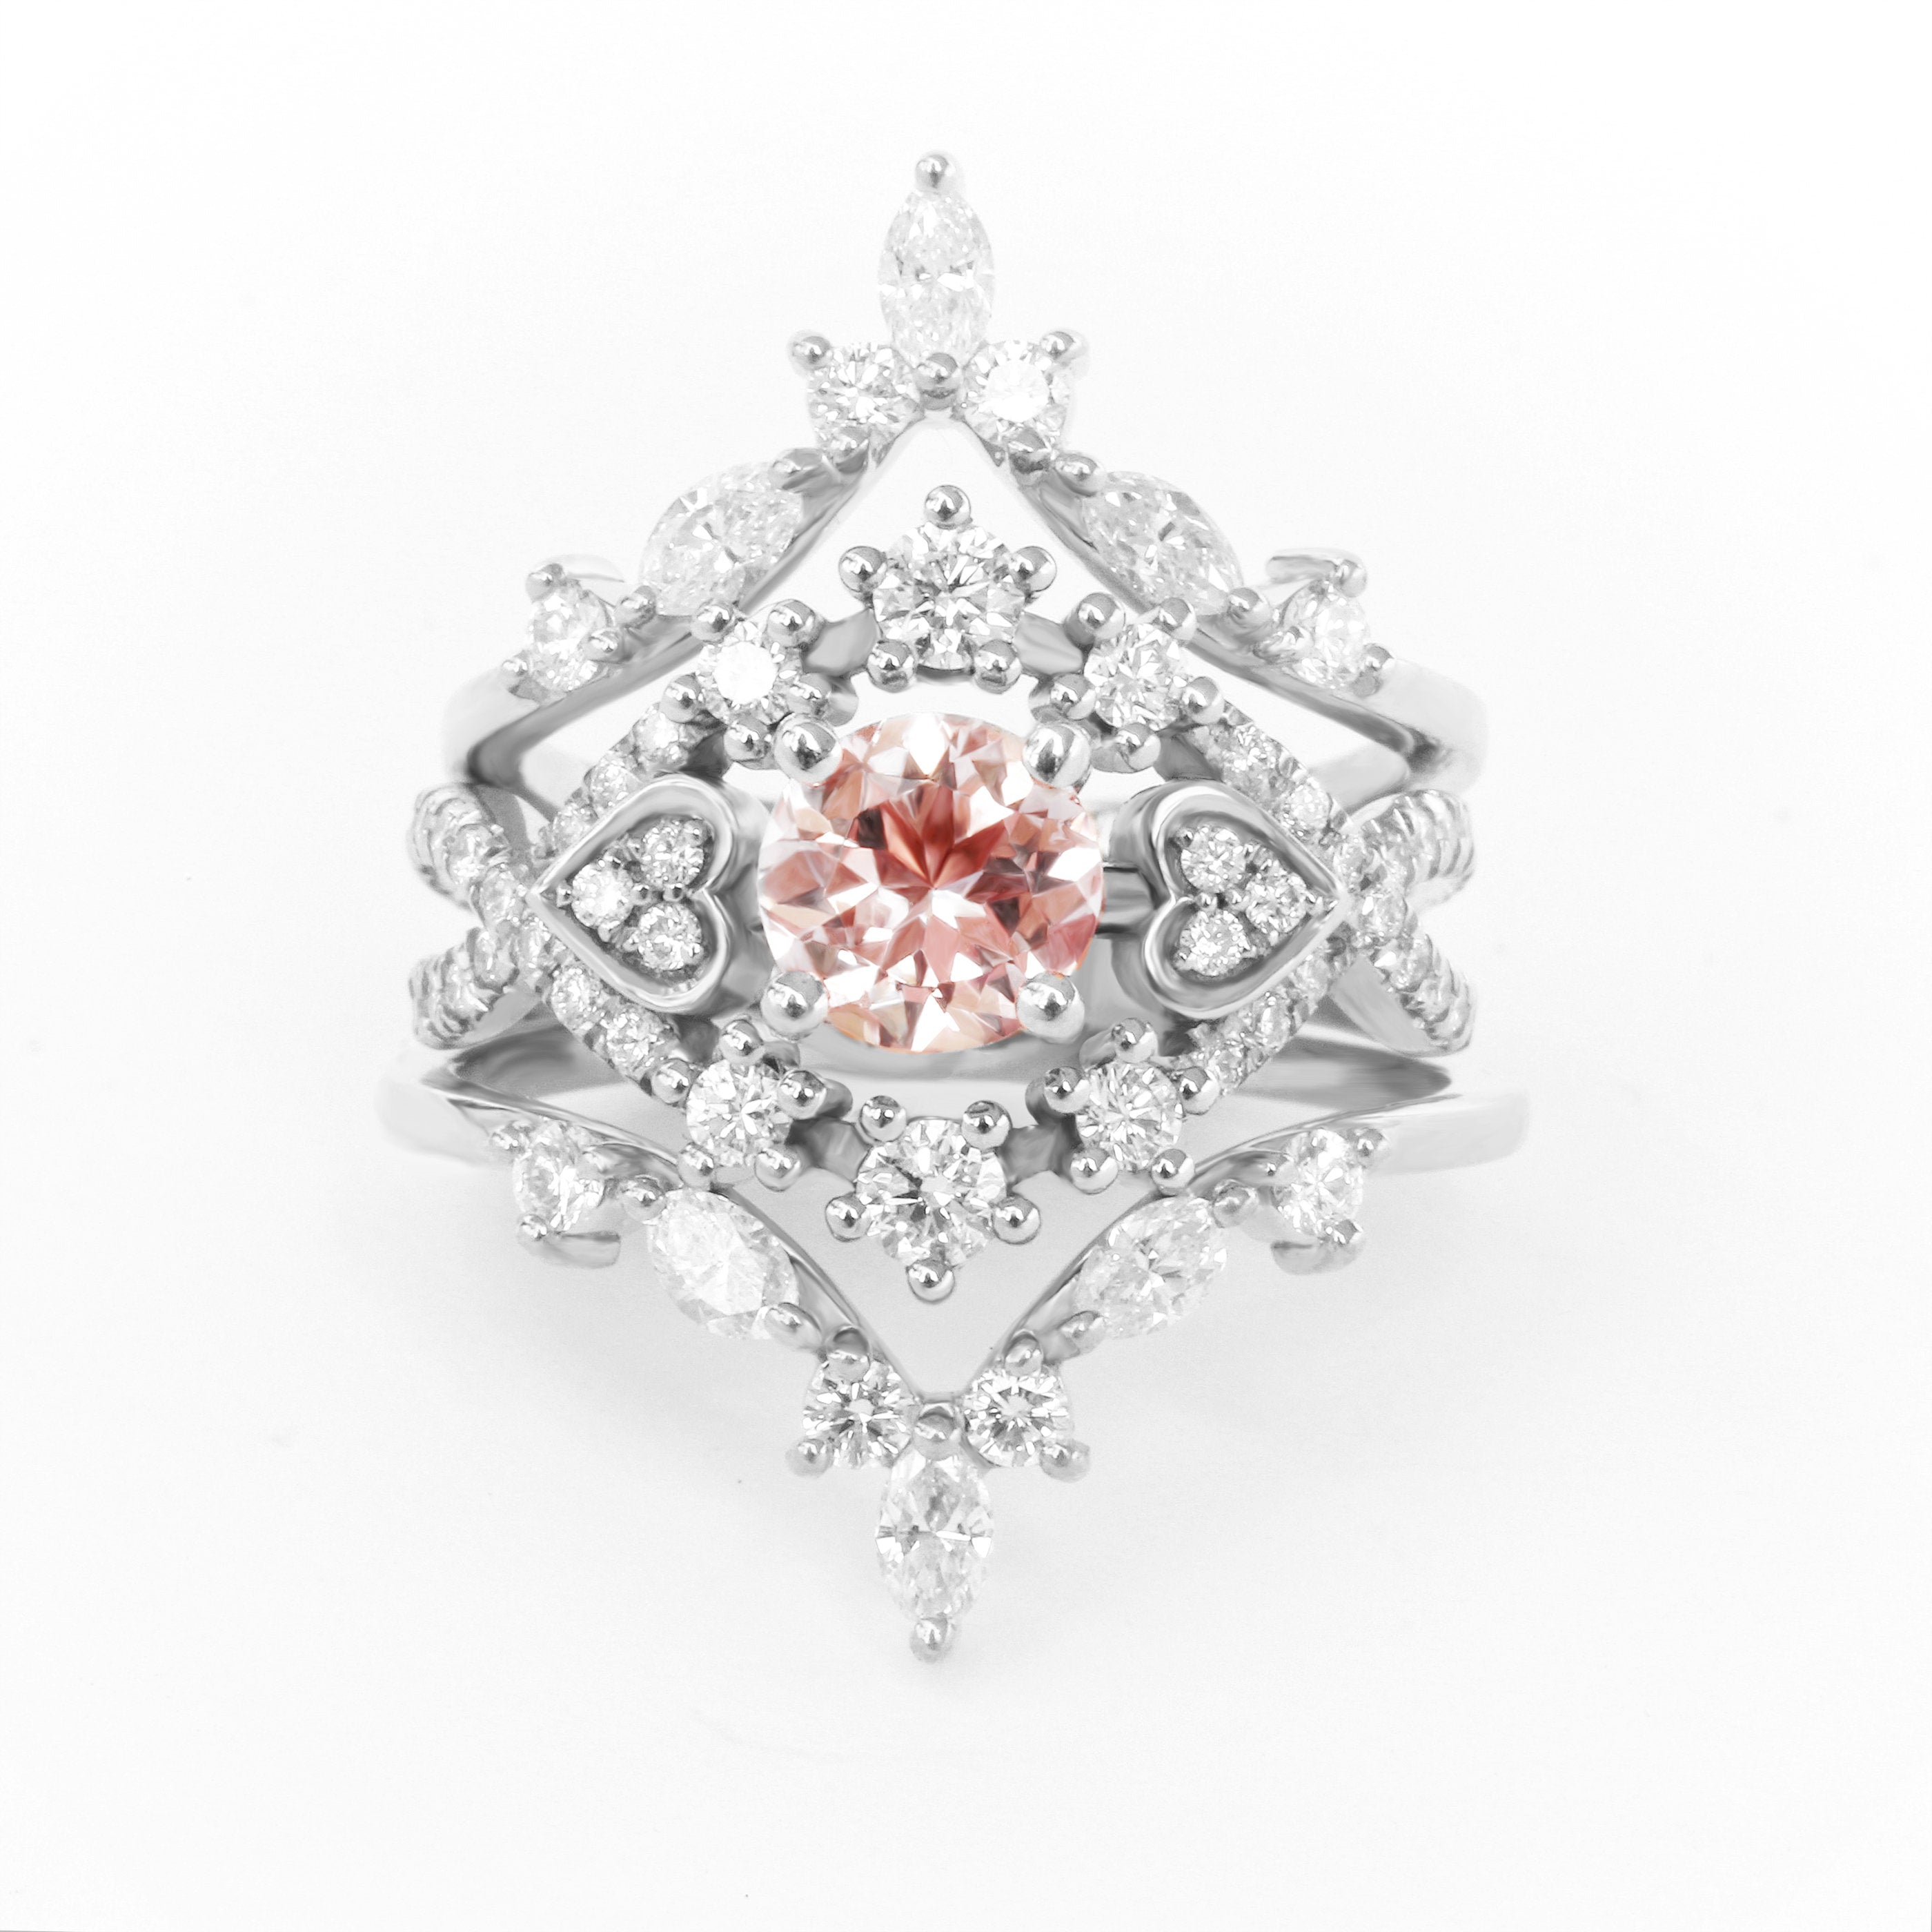 Destiny & Hermes - Morganite & Diamond Halo Unique Engagement & Wedding, Bridal Rings Set - sillyshinydiamonds